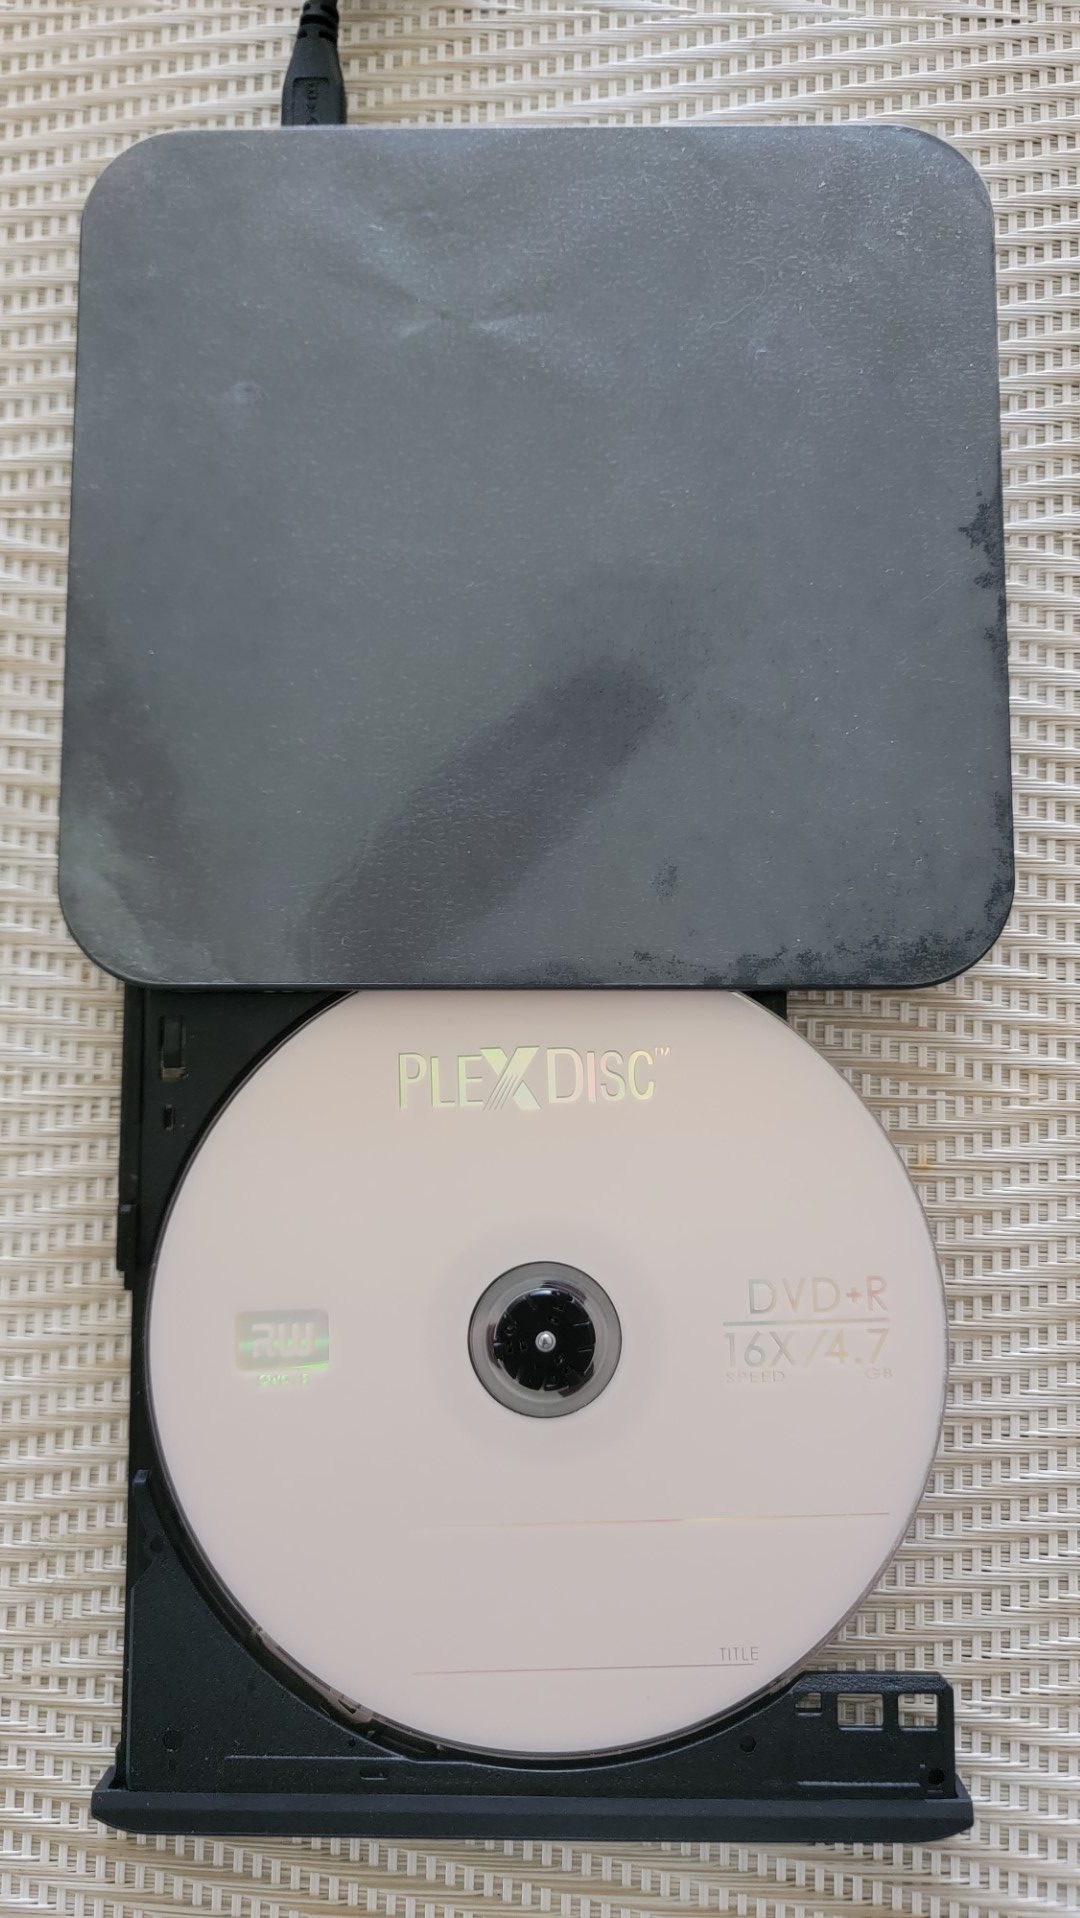 PlexDisc DVD+R in the LG GP96YB70 External Slim Optical Drive